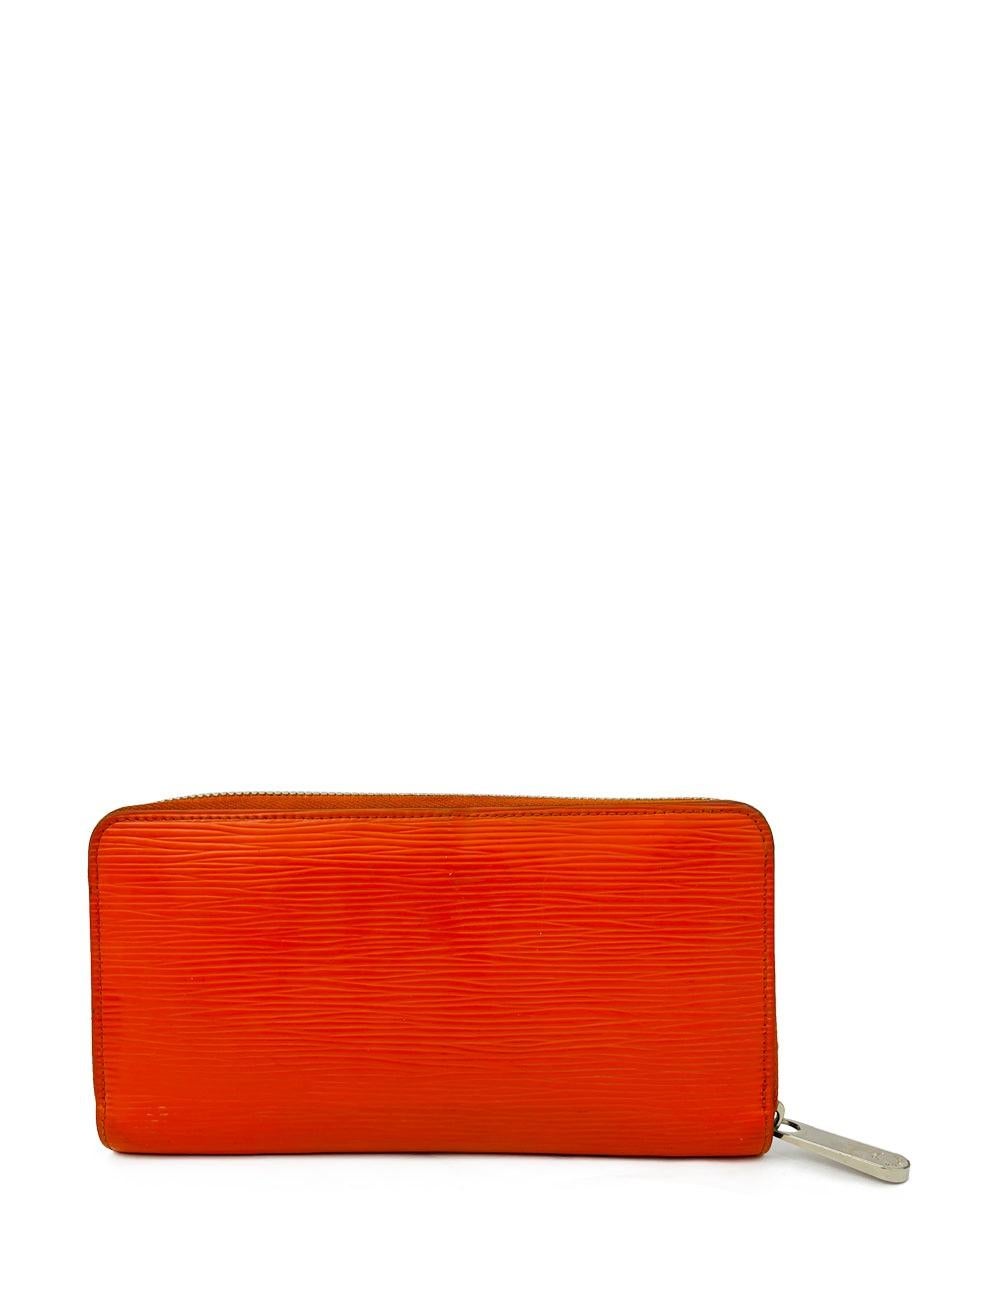 Louis Vuitton Orange EPI Leather Wallet In Good Condition For Sale In Amman, JO